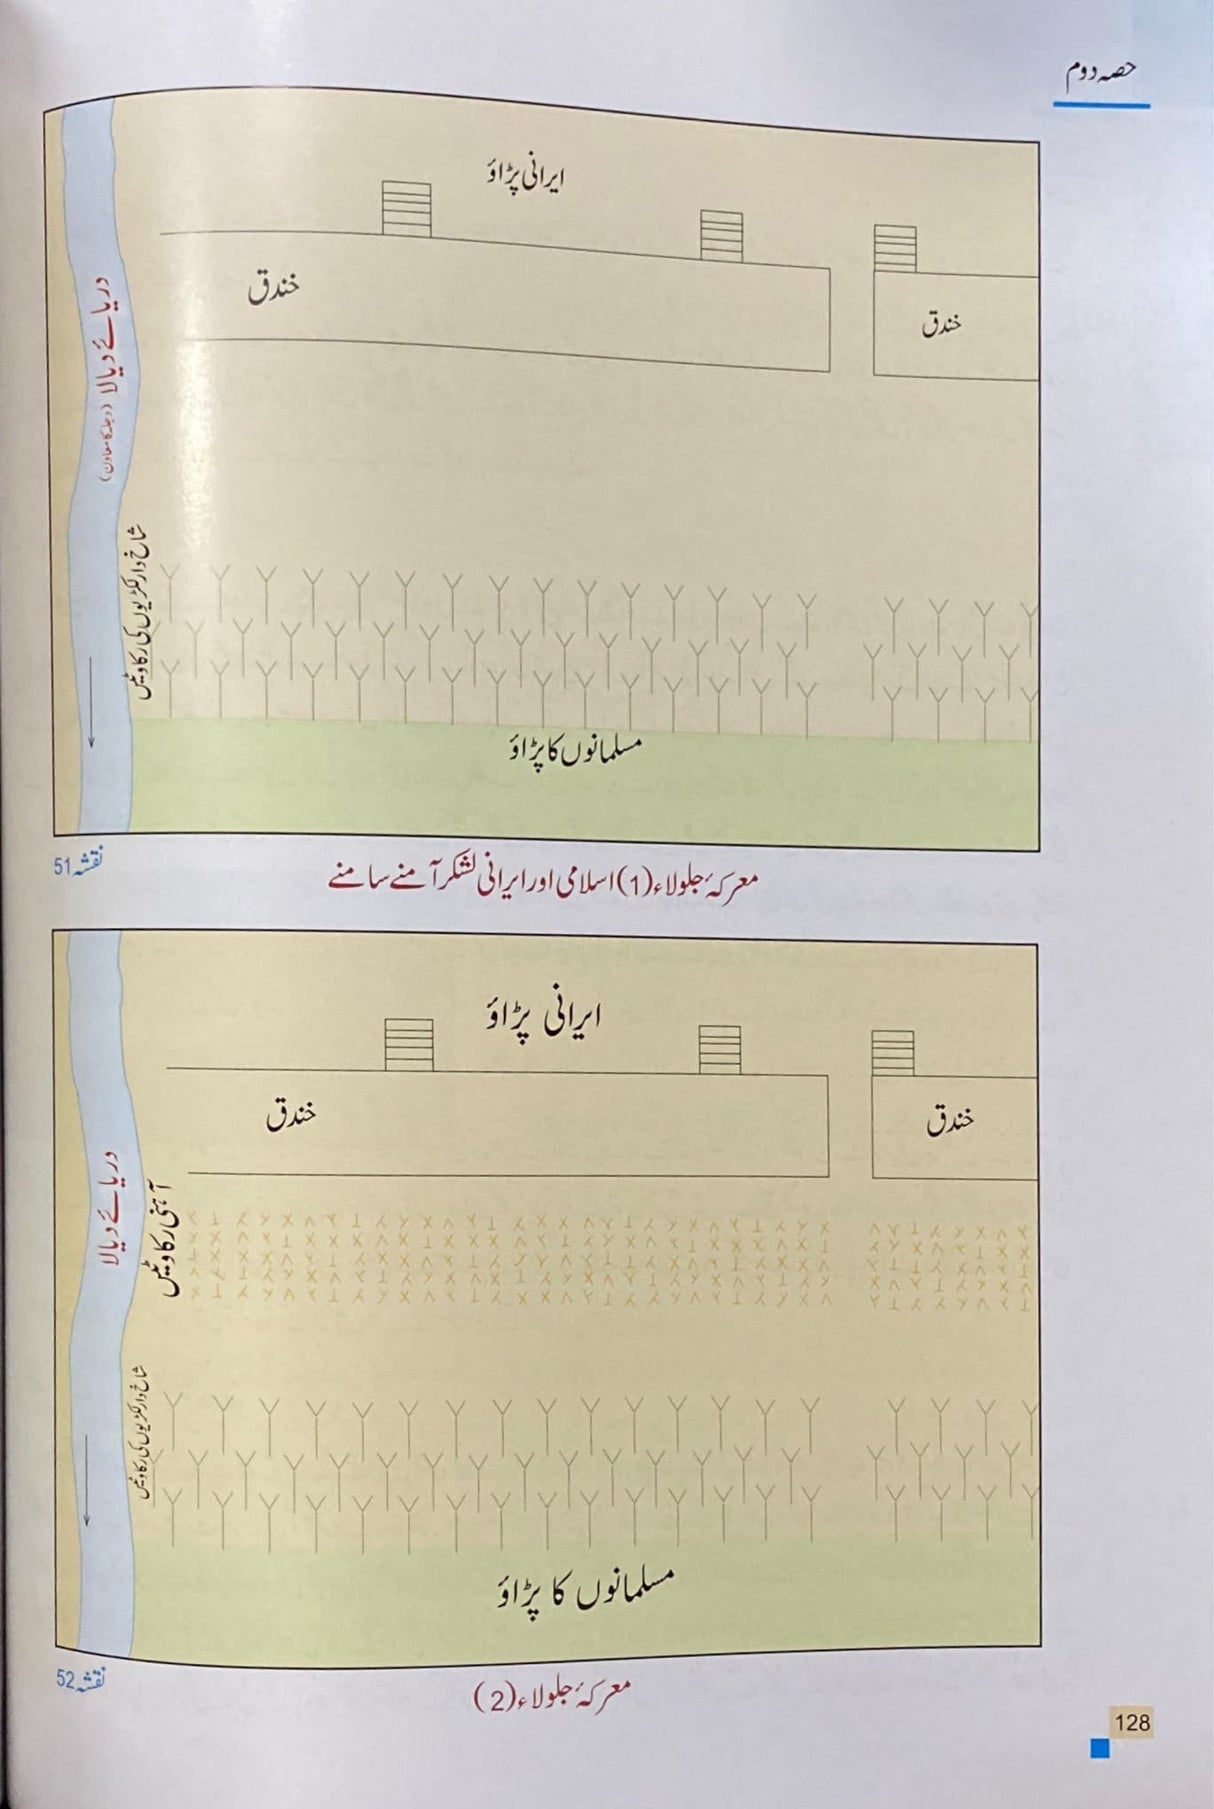 Urdu Atlas Futuhati Islamiya (Colour)